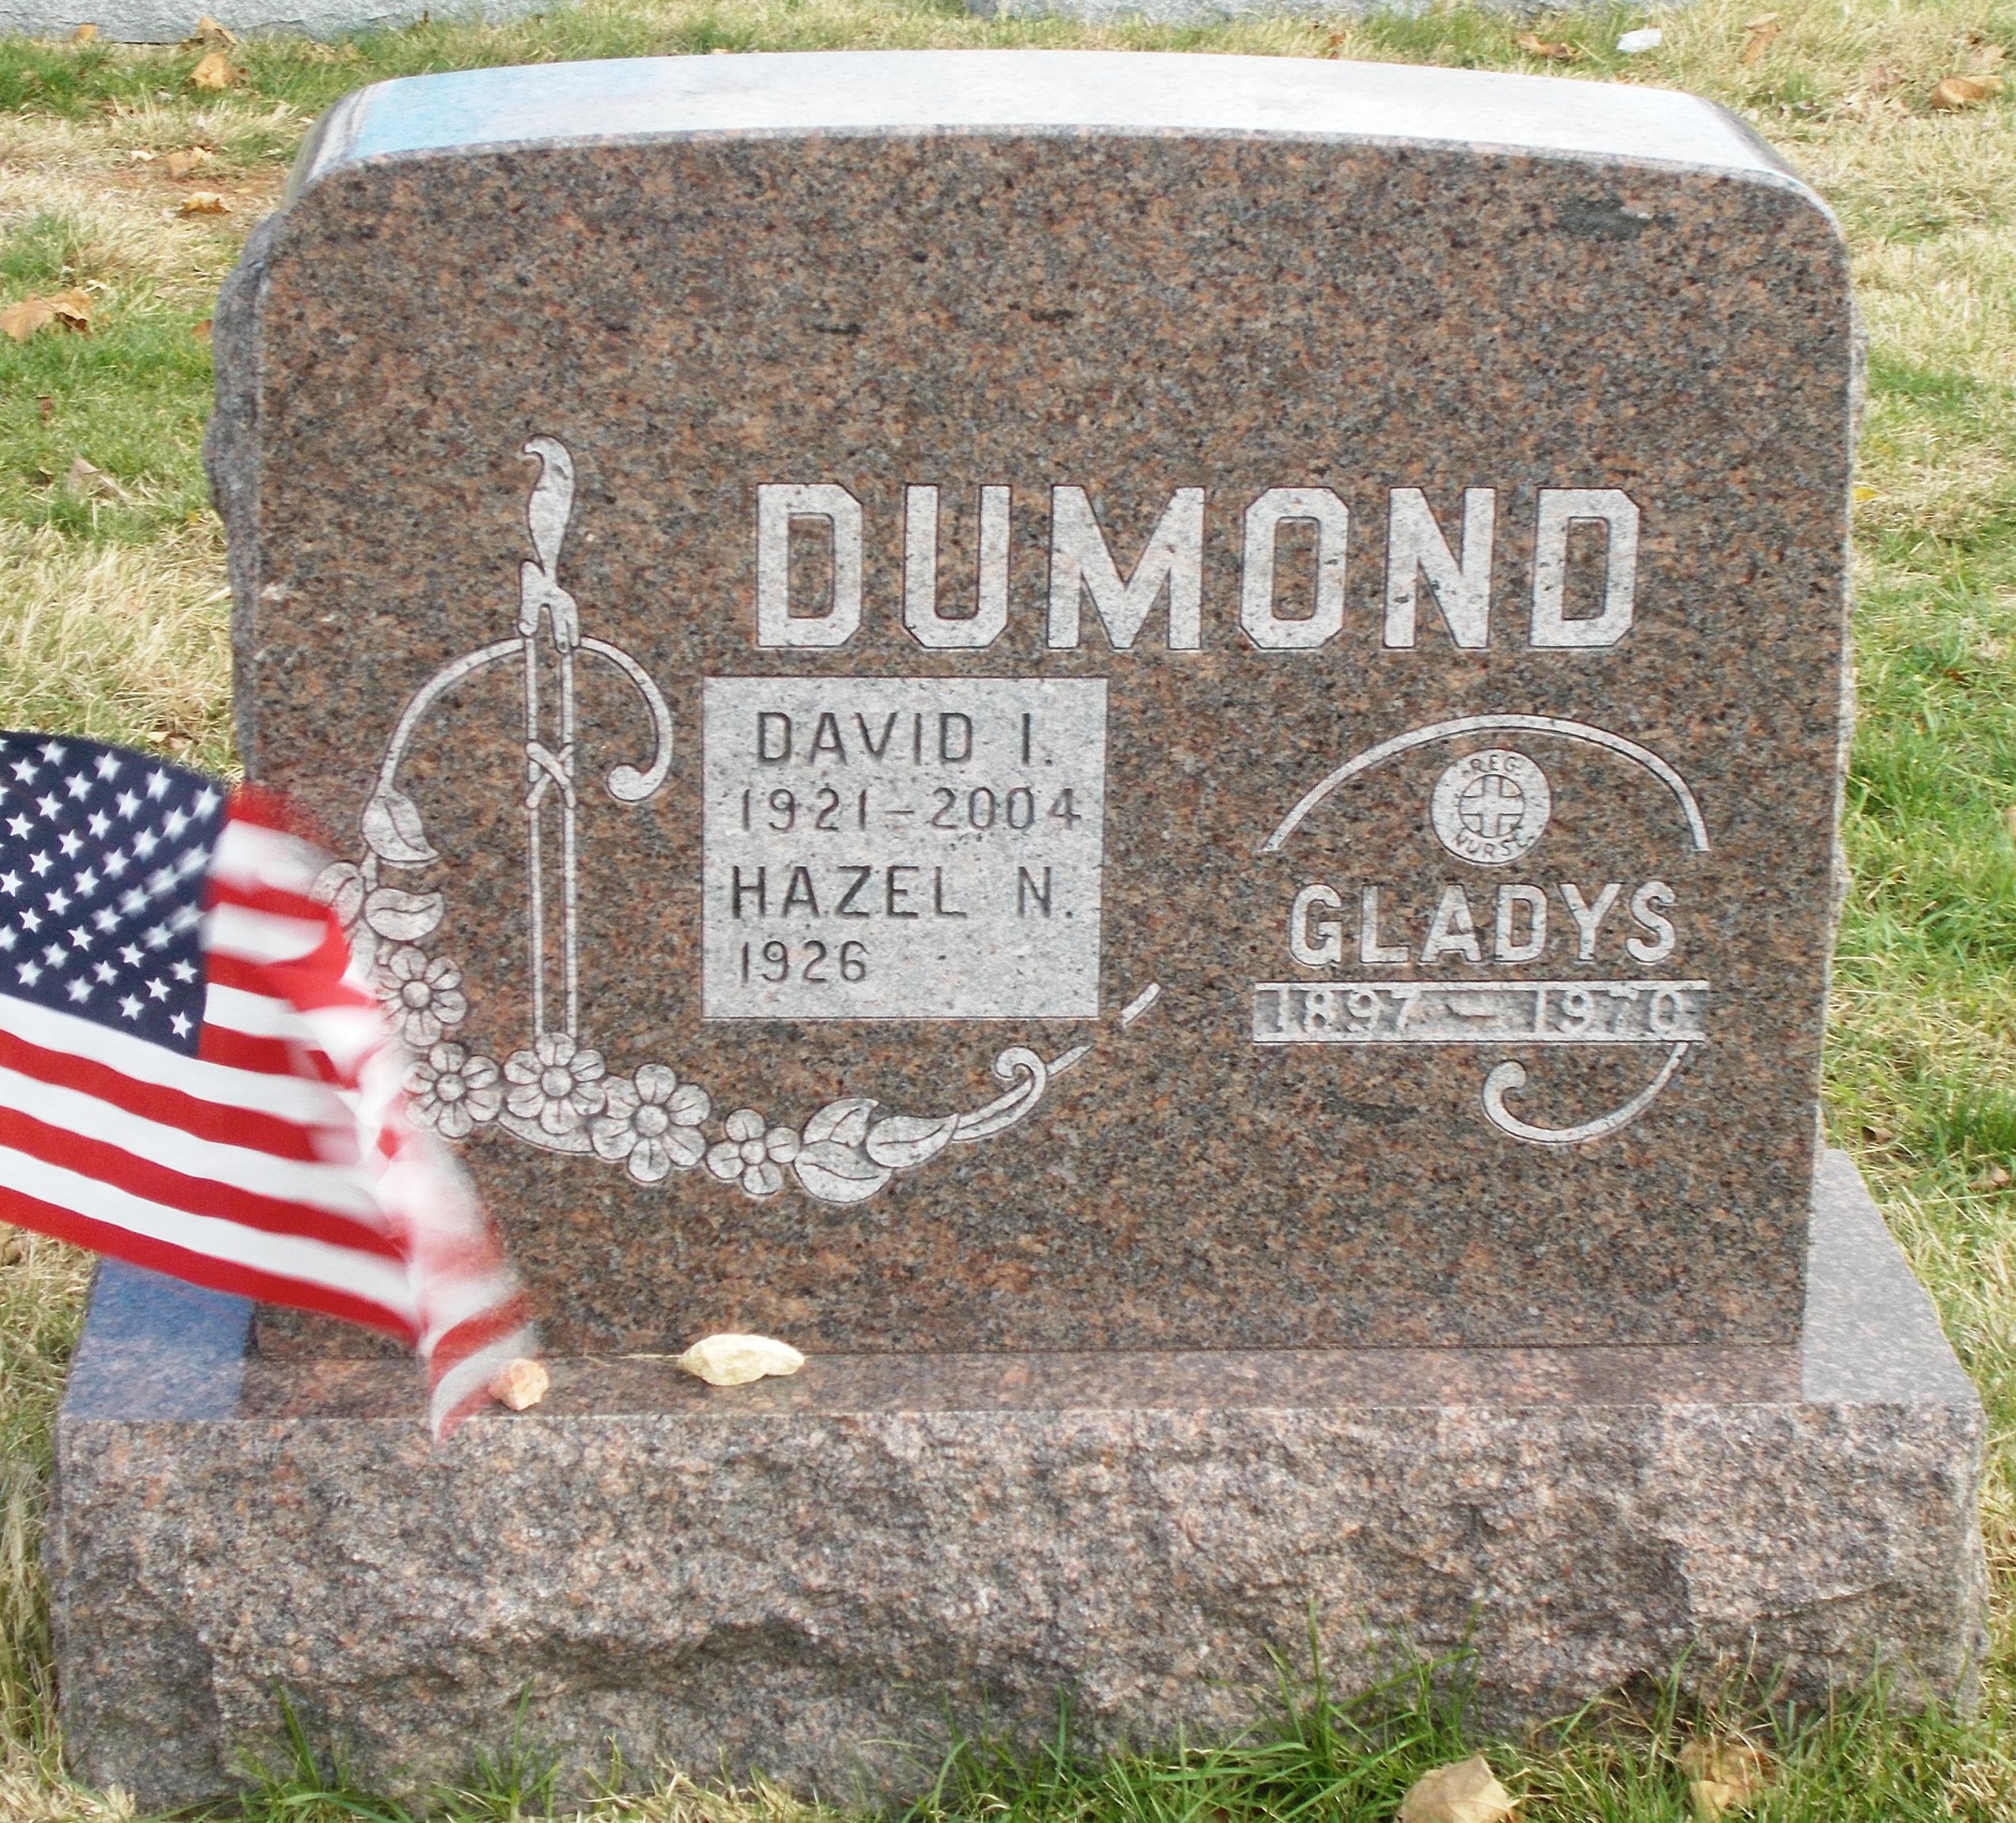 Gladys Dumond